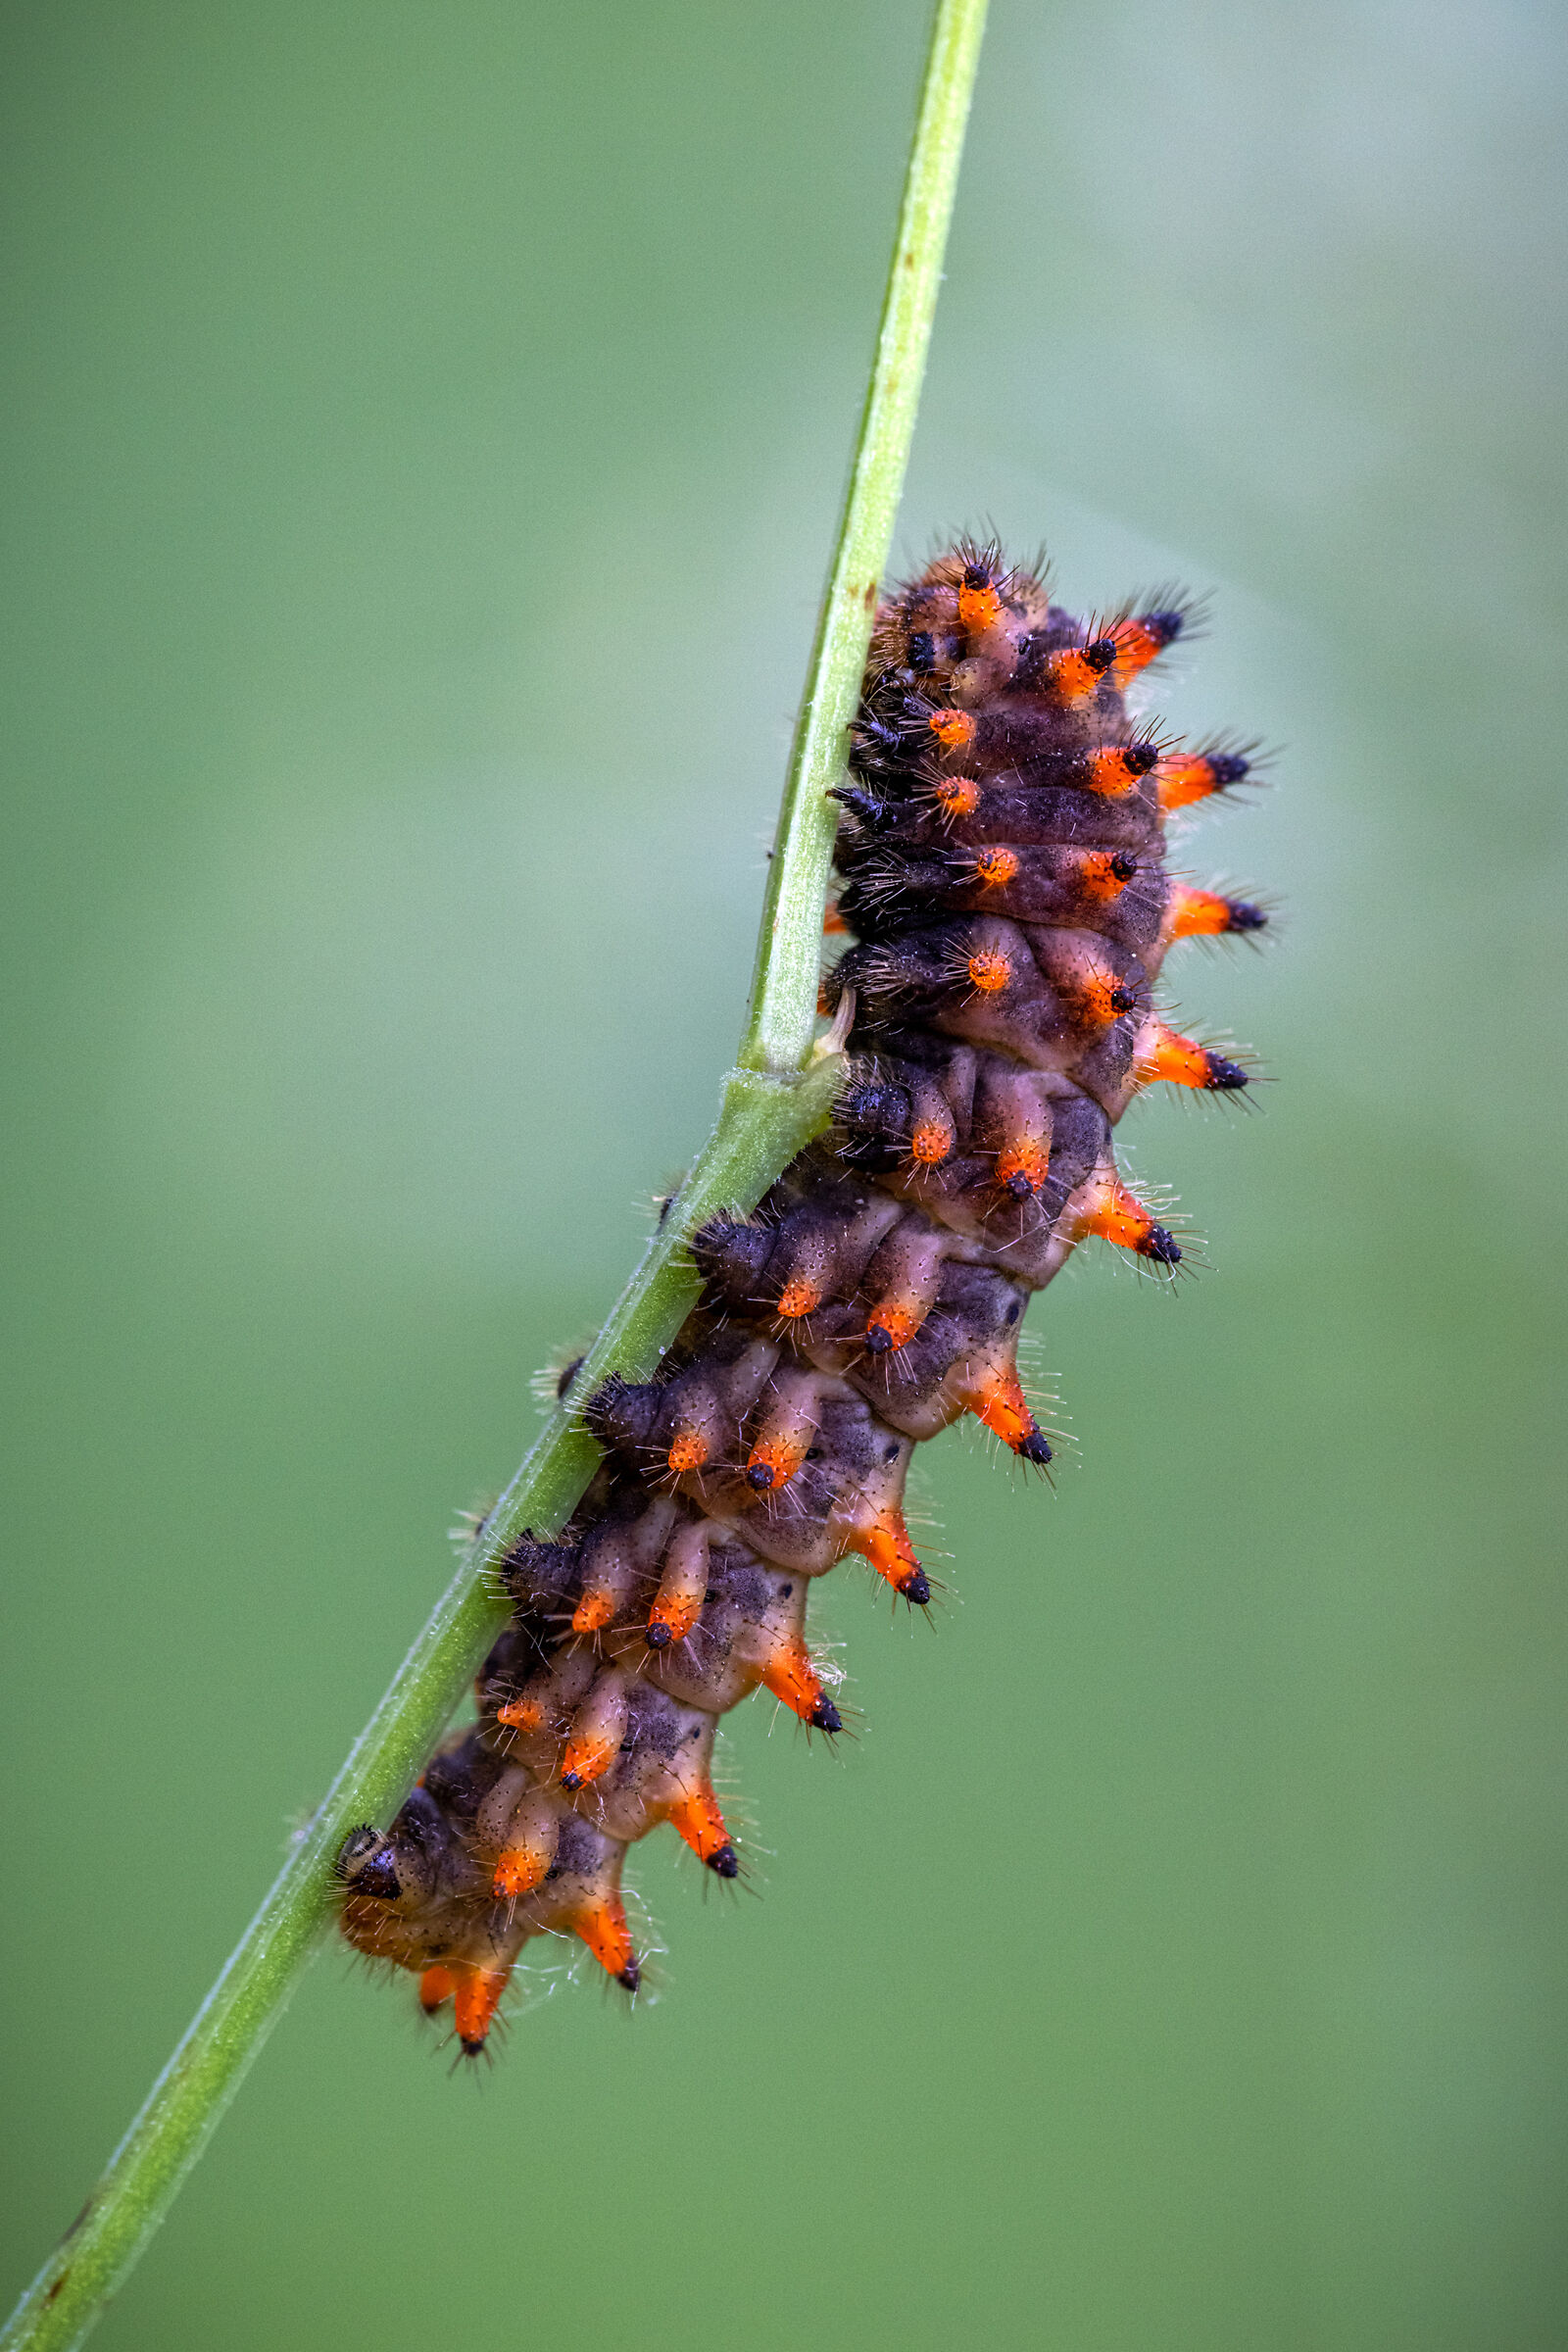 The usual caterpillar...